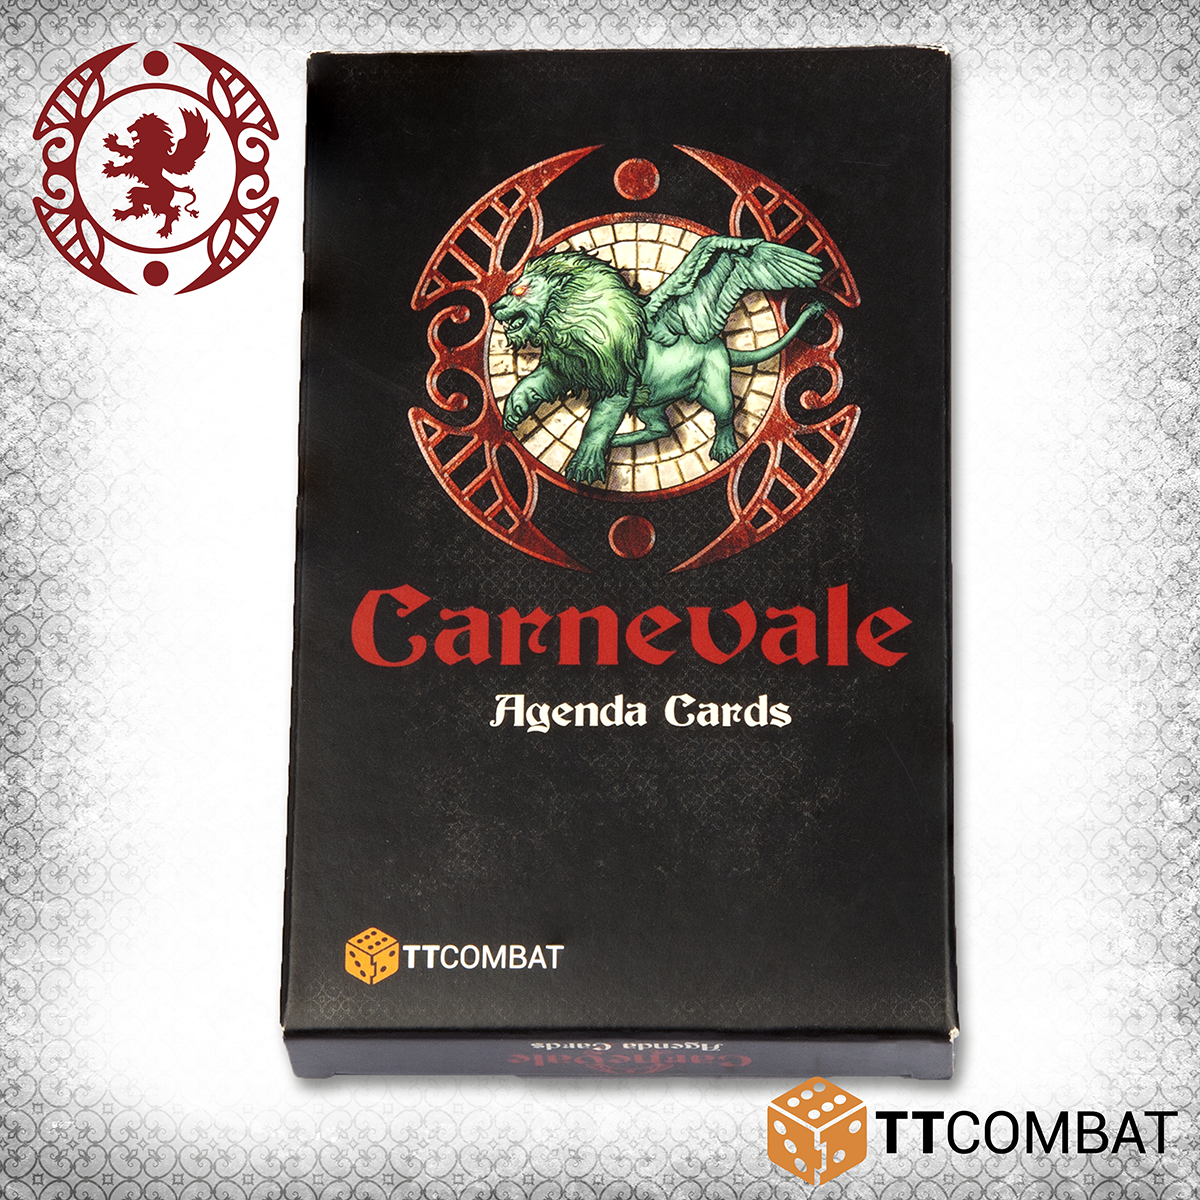 Carnevale Agenda Cards Box